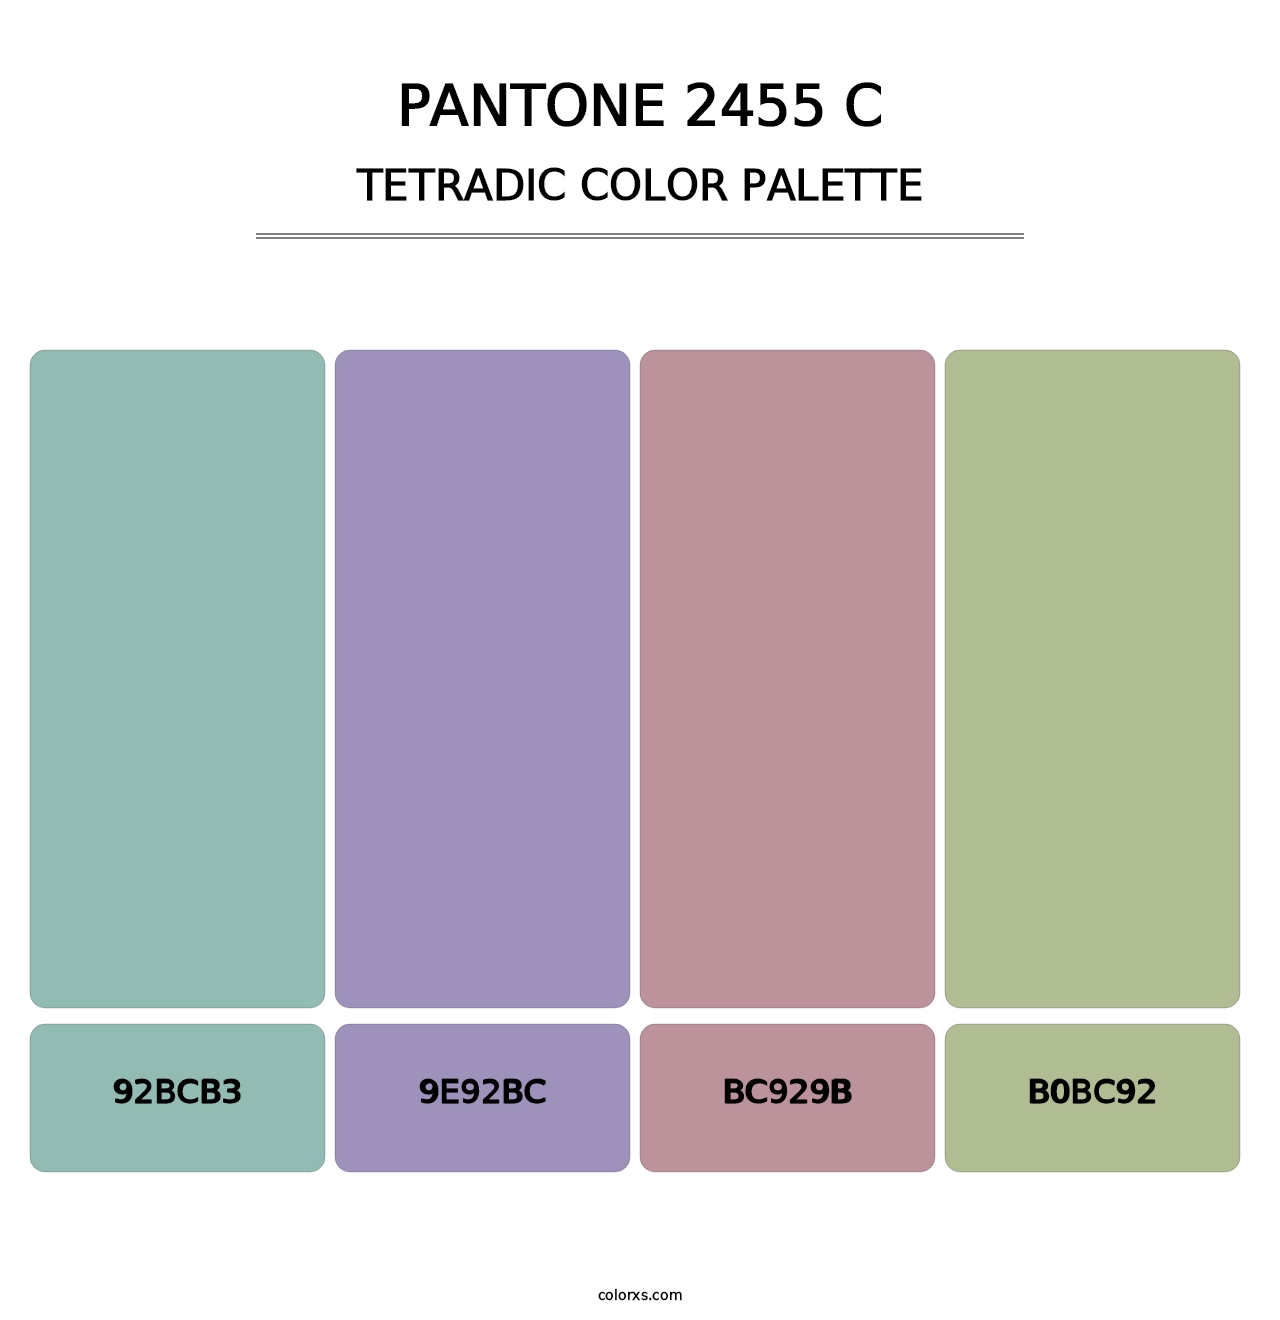 PANTONE 2455 C - Tetradic Color Palette